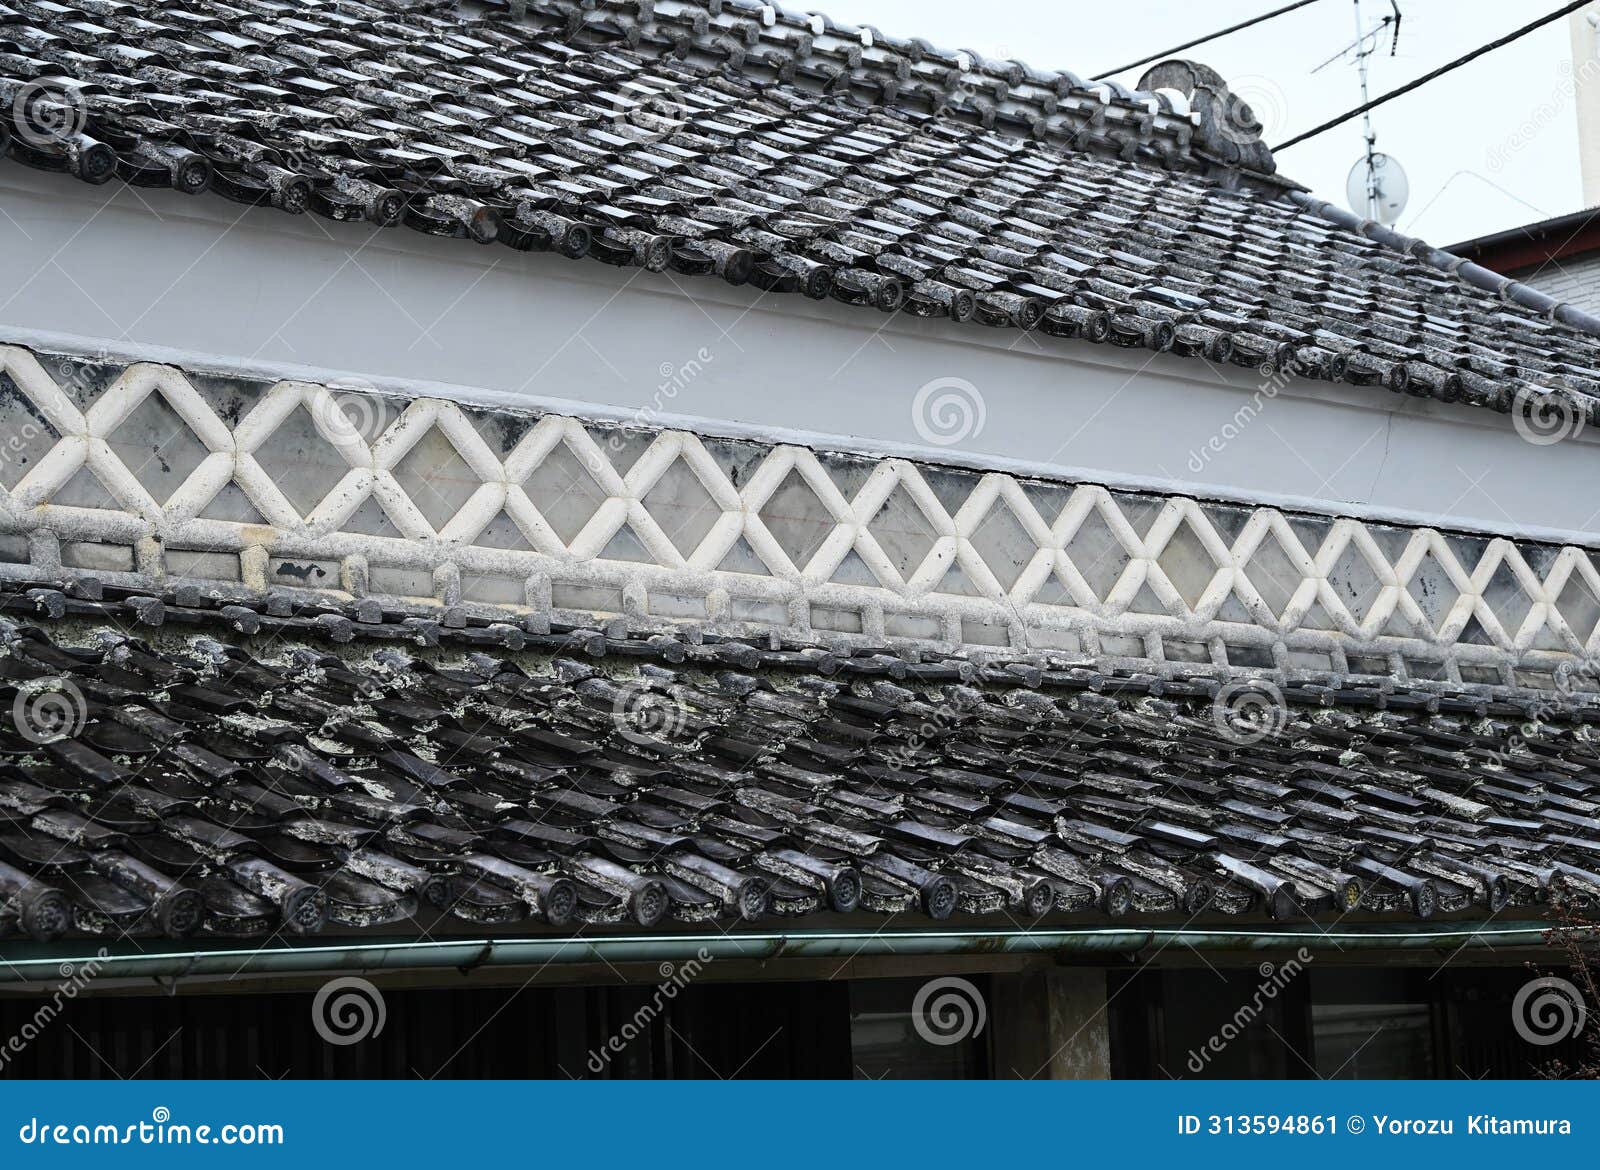 japan travel. traditional japanese wall pattern, called namako wall in japan.